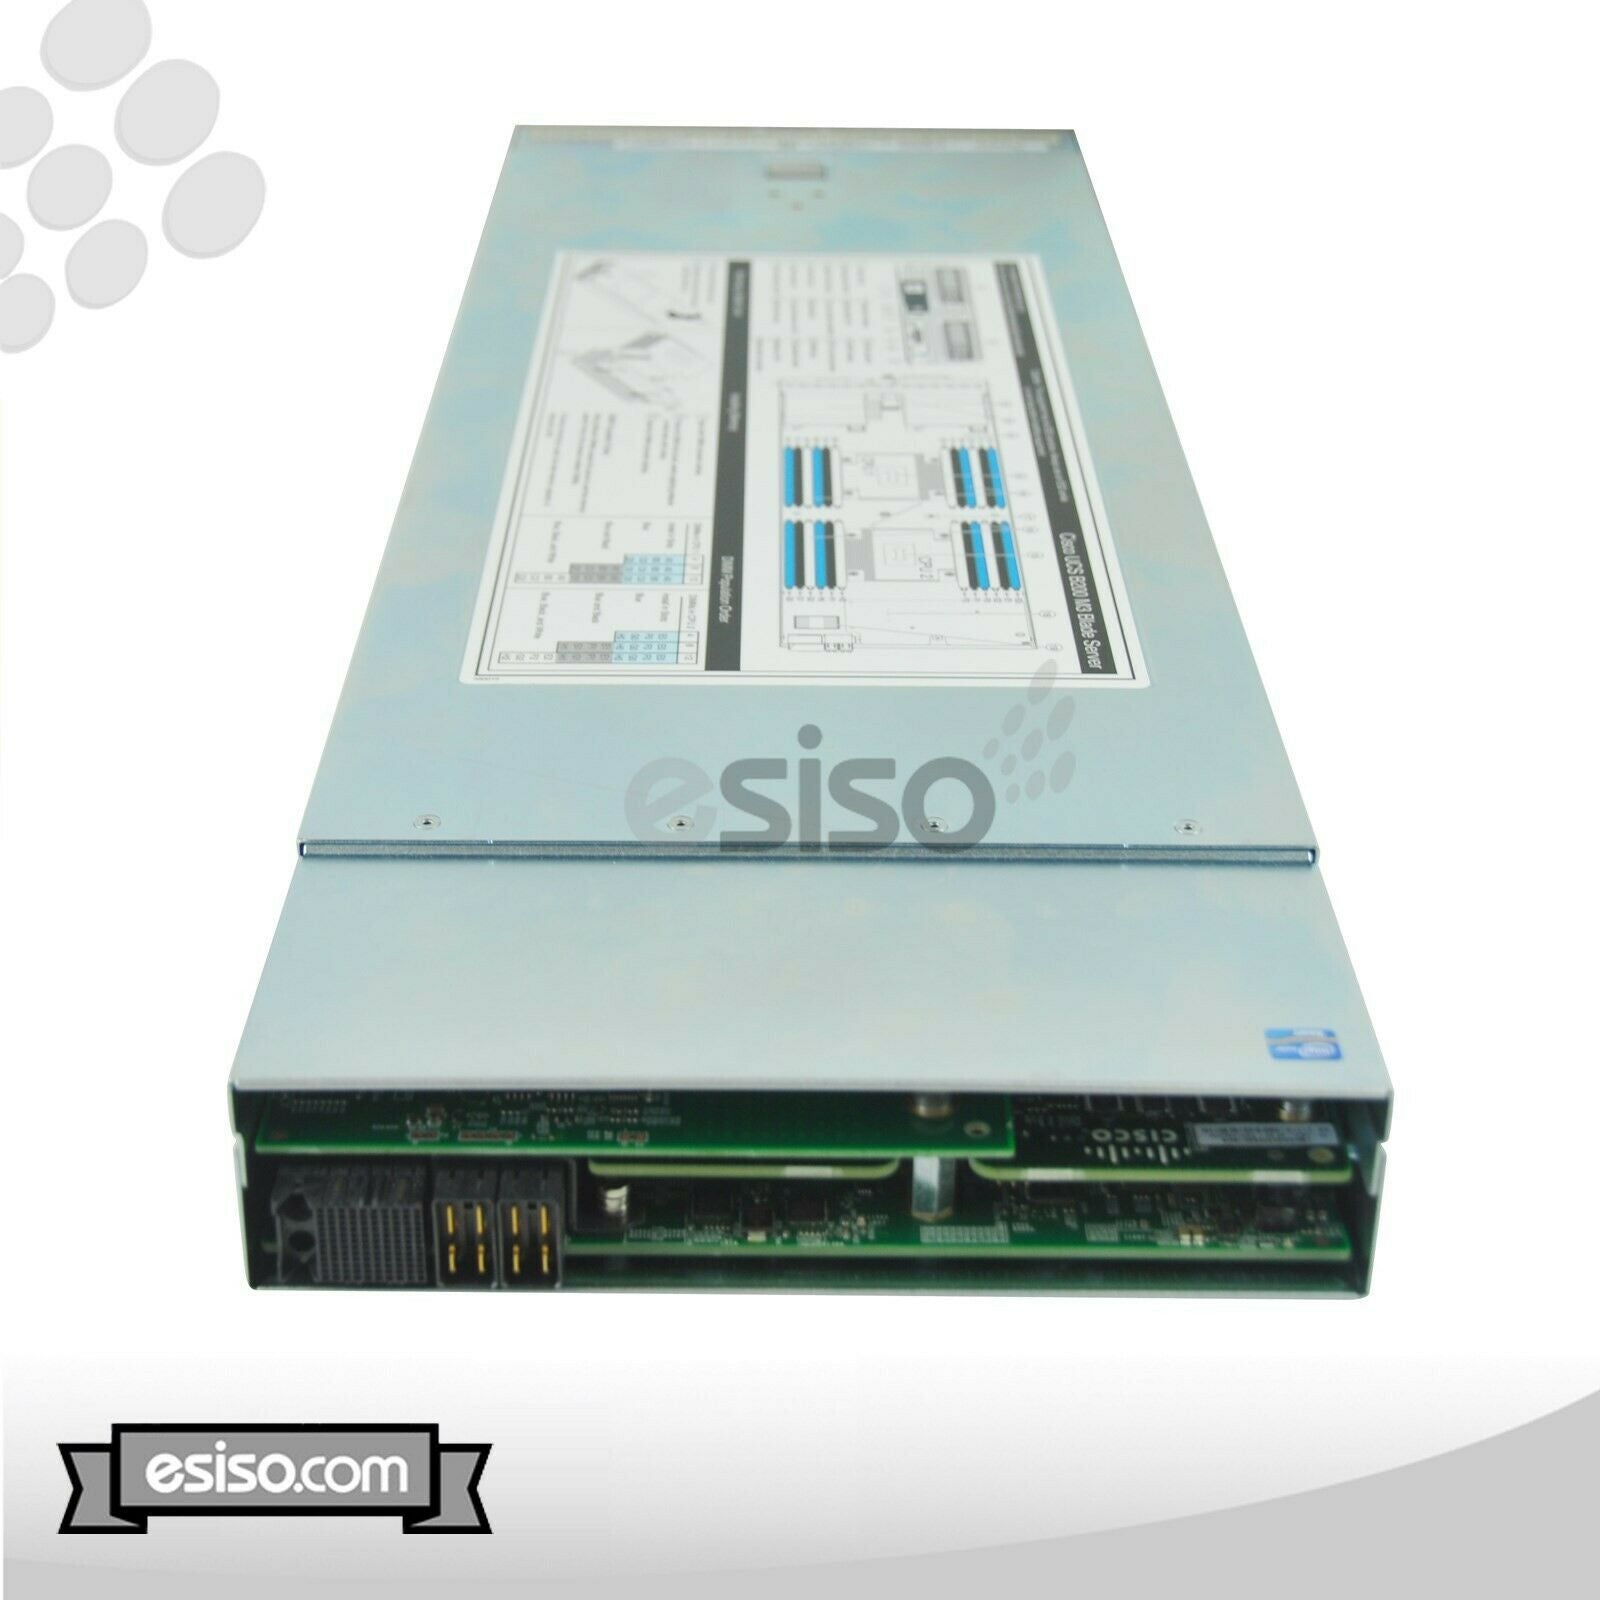 CISCO UCS B200 M3 BLADE 2x EIGHT CORE E5-2670 2.6GHz 192GB RAM 2x 300GB SAS